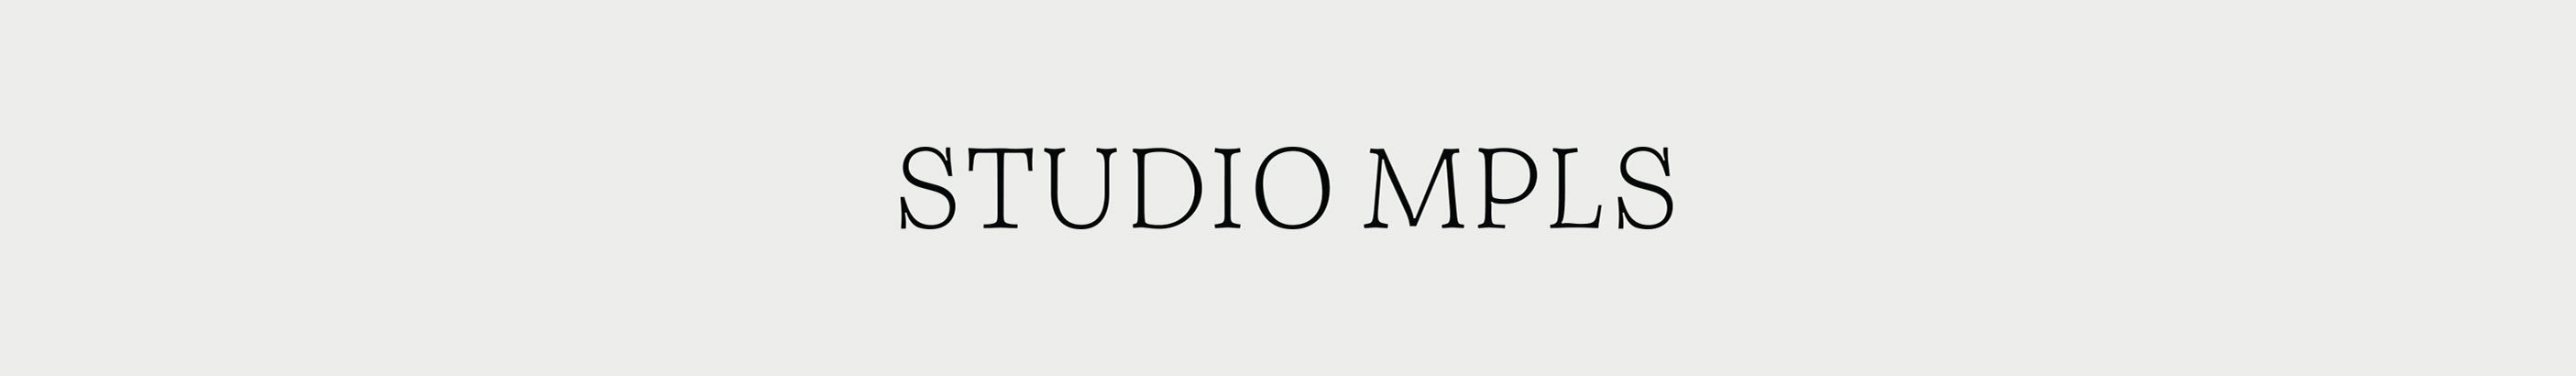 Studio MPLS's profile banner